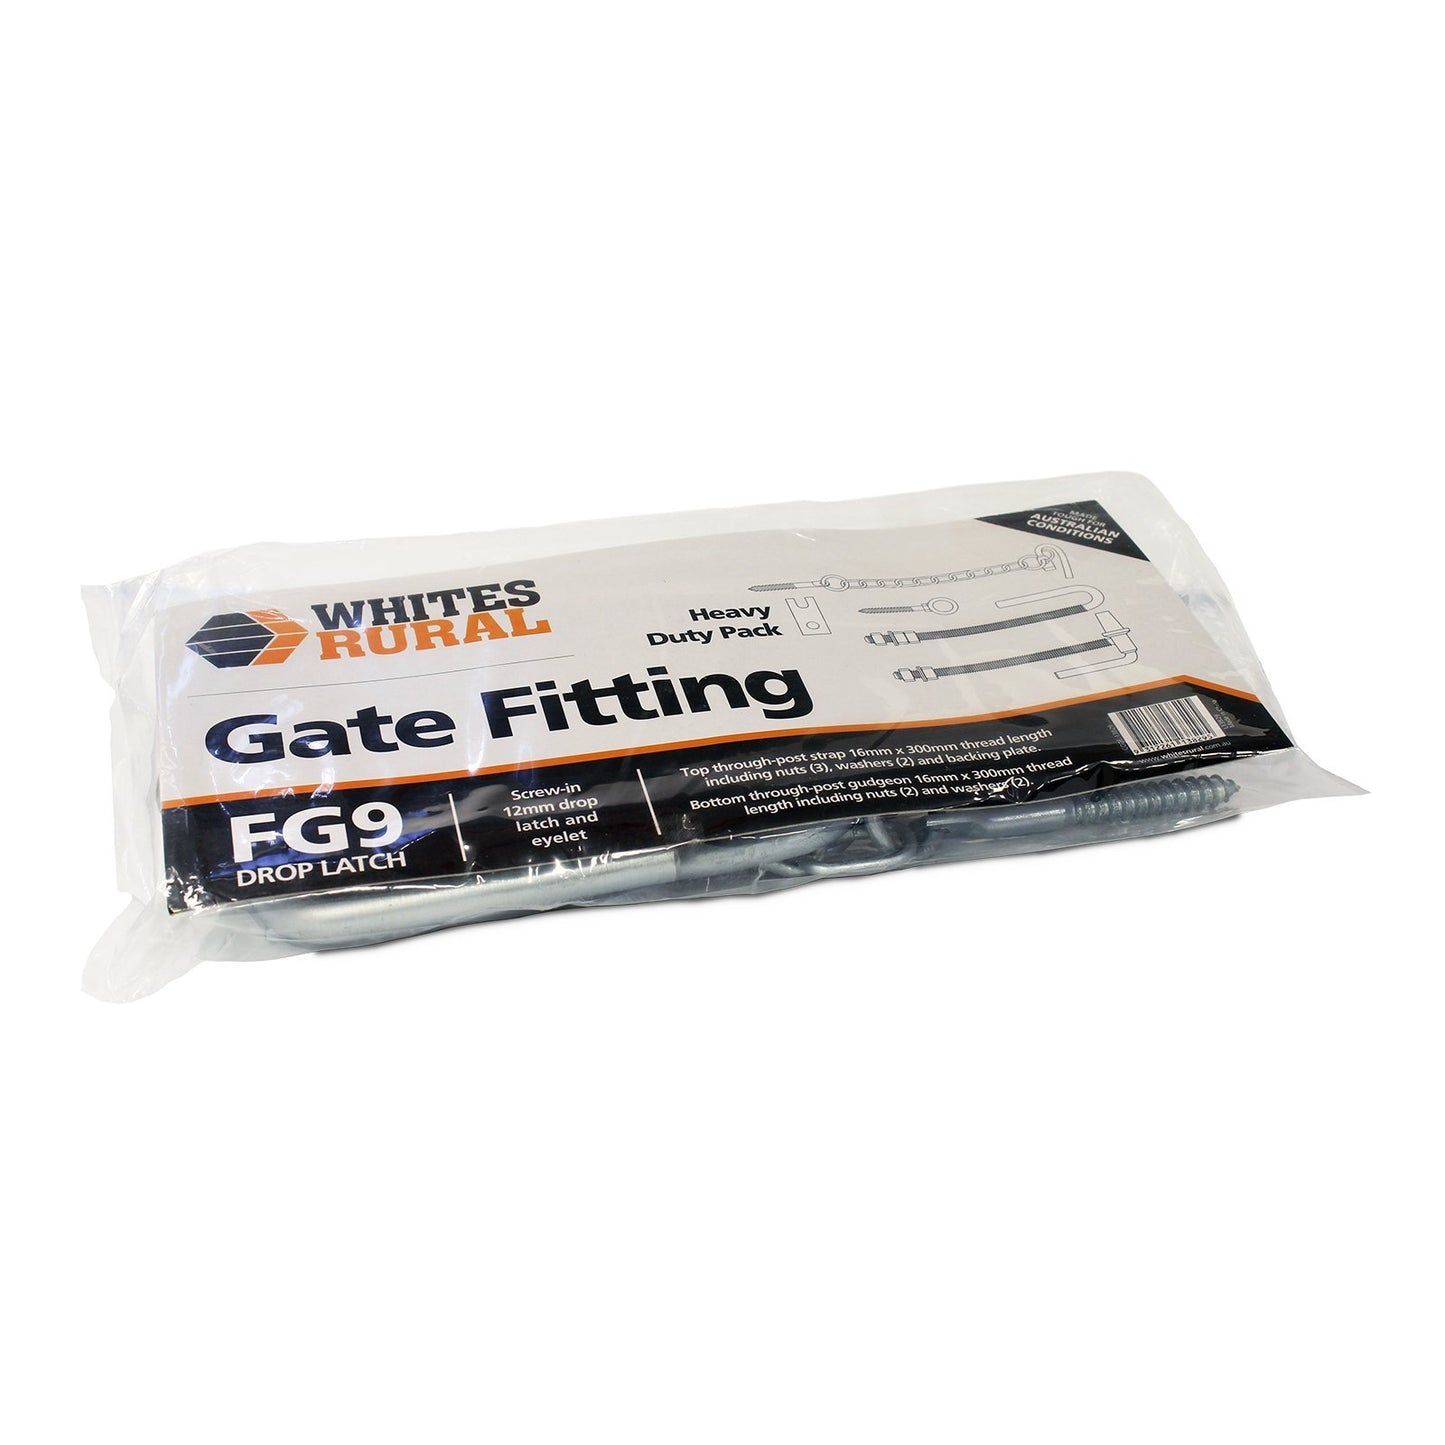 Gate Fitting FG9 Drop Latch Heavy Duty 13829 Whites - Woonona Petfood & Produce